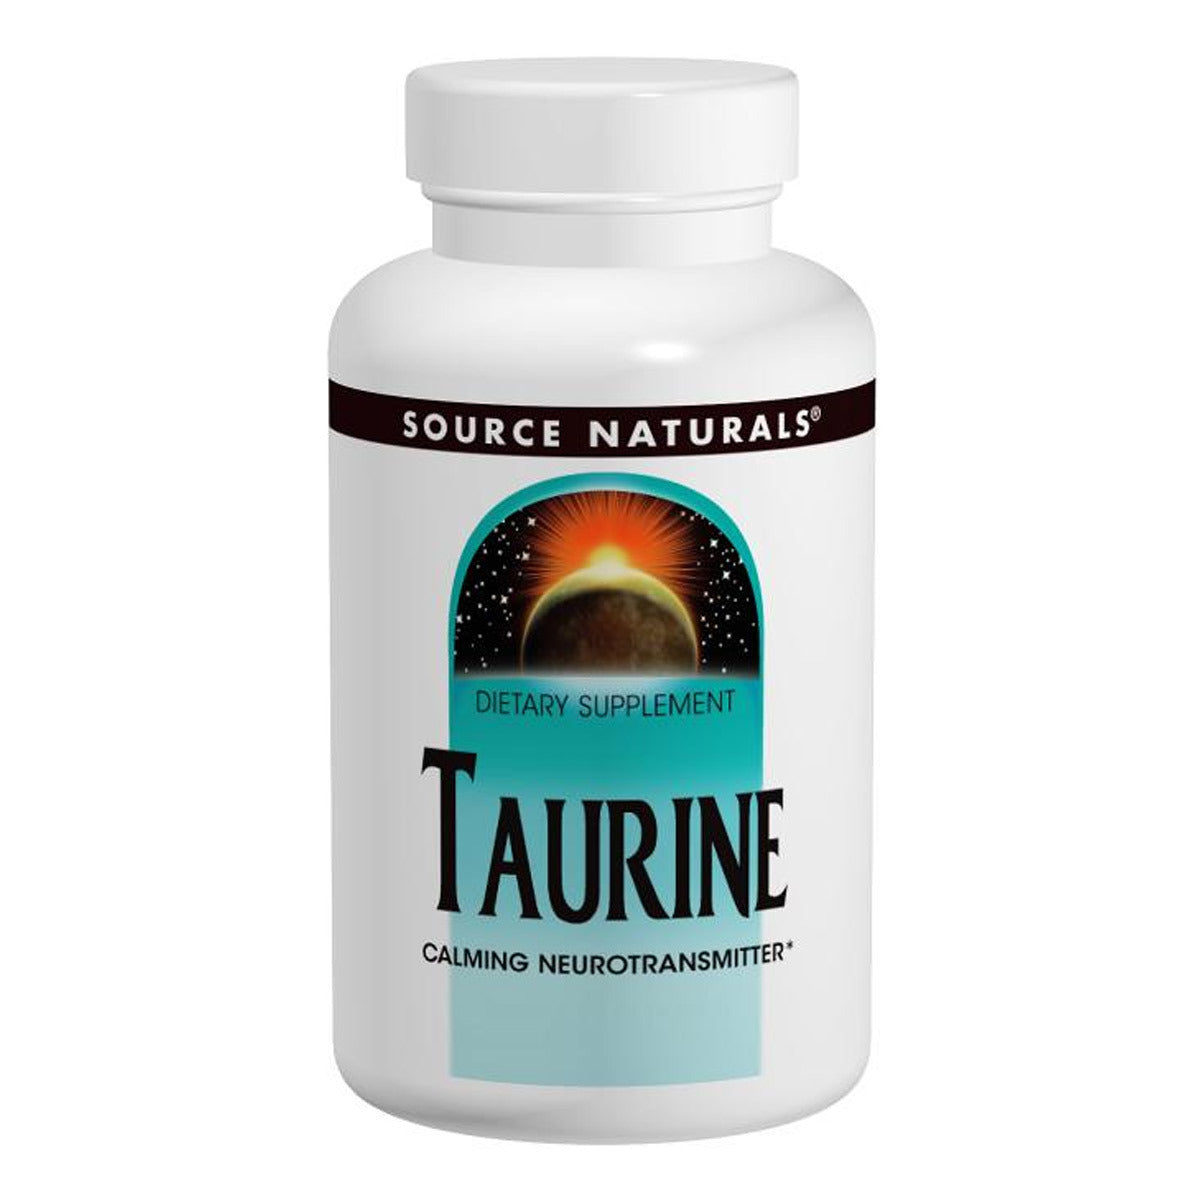 Primary image of Taurine 500mg